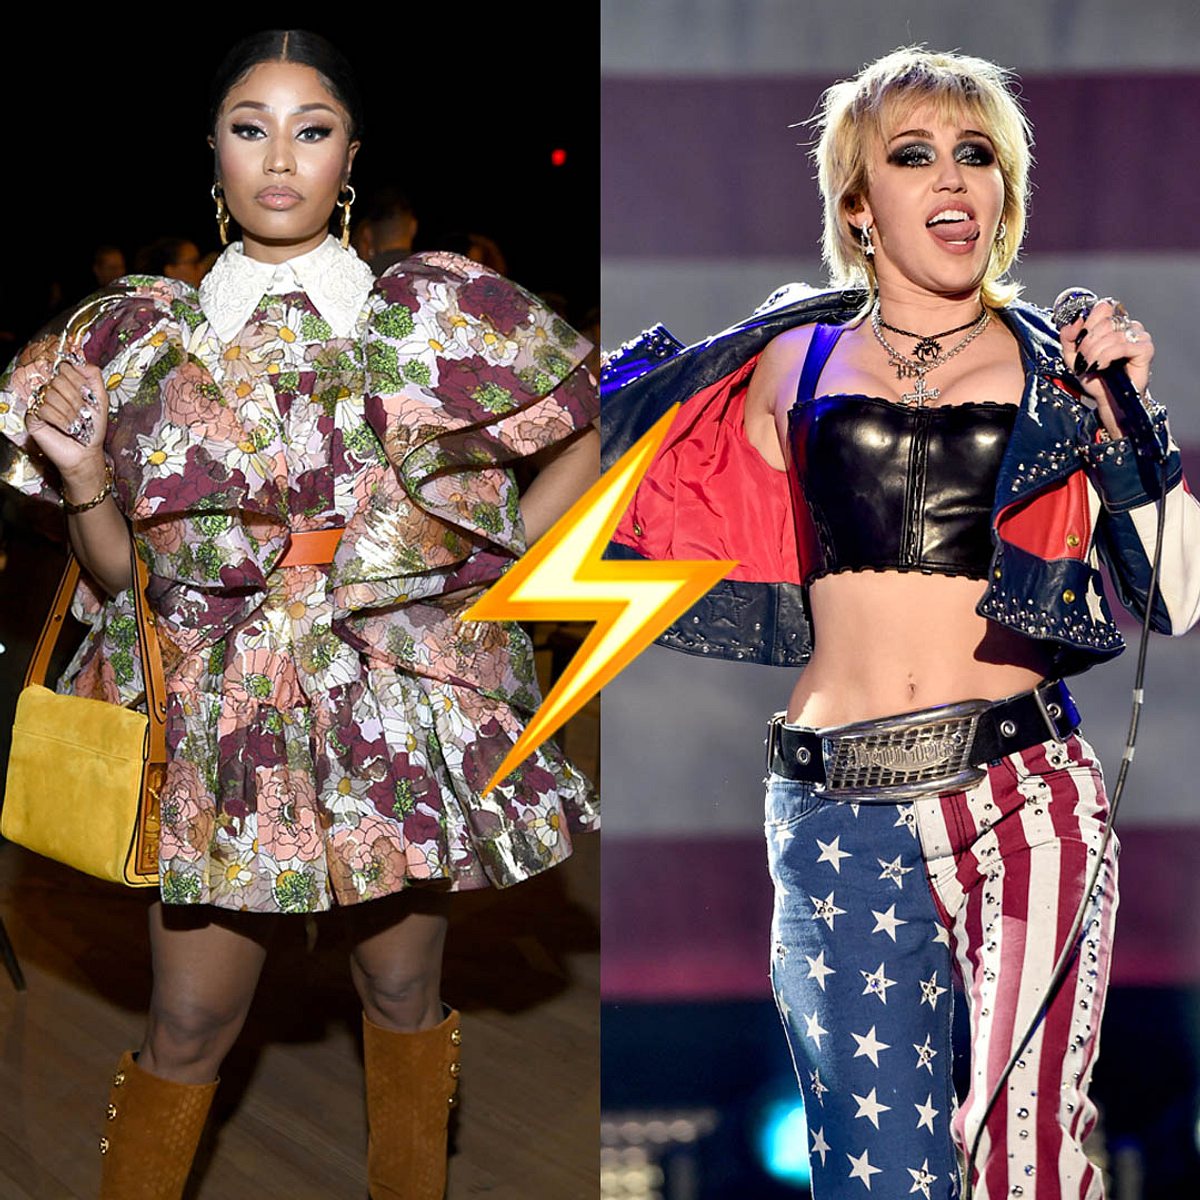 Stars beschimpfen Stars: Nicki Minaj beleidigt Miley Cyrus